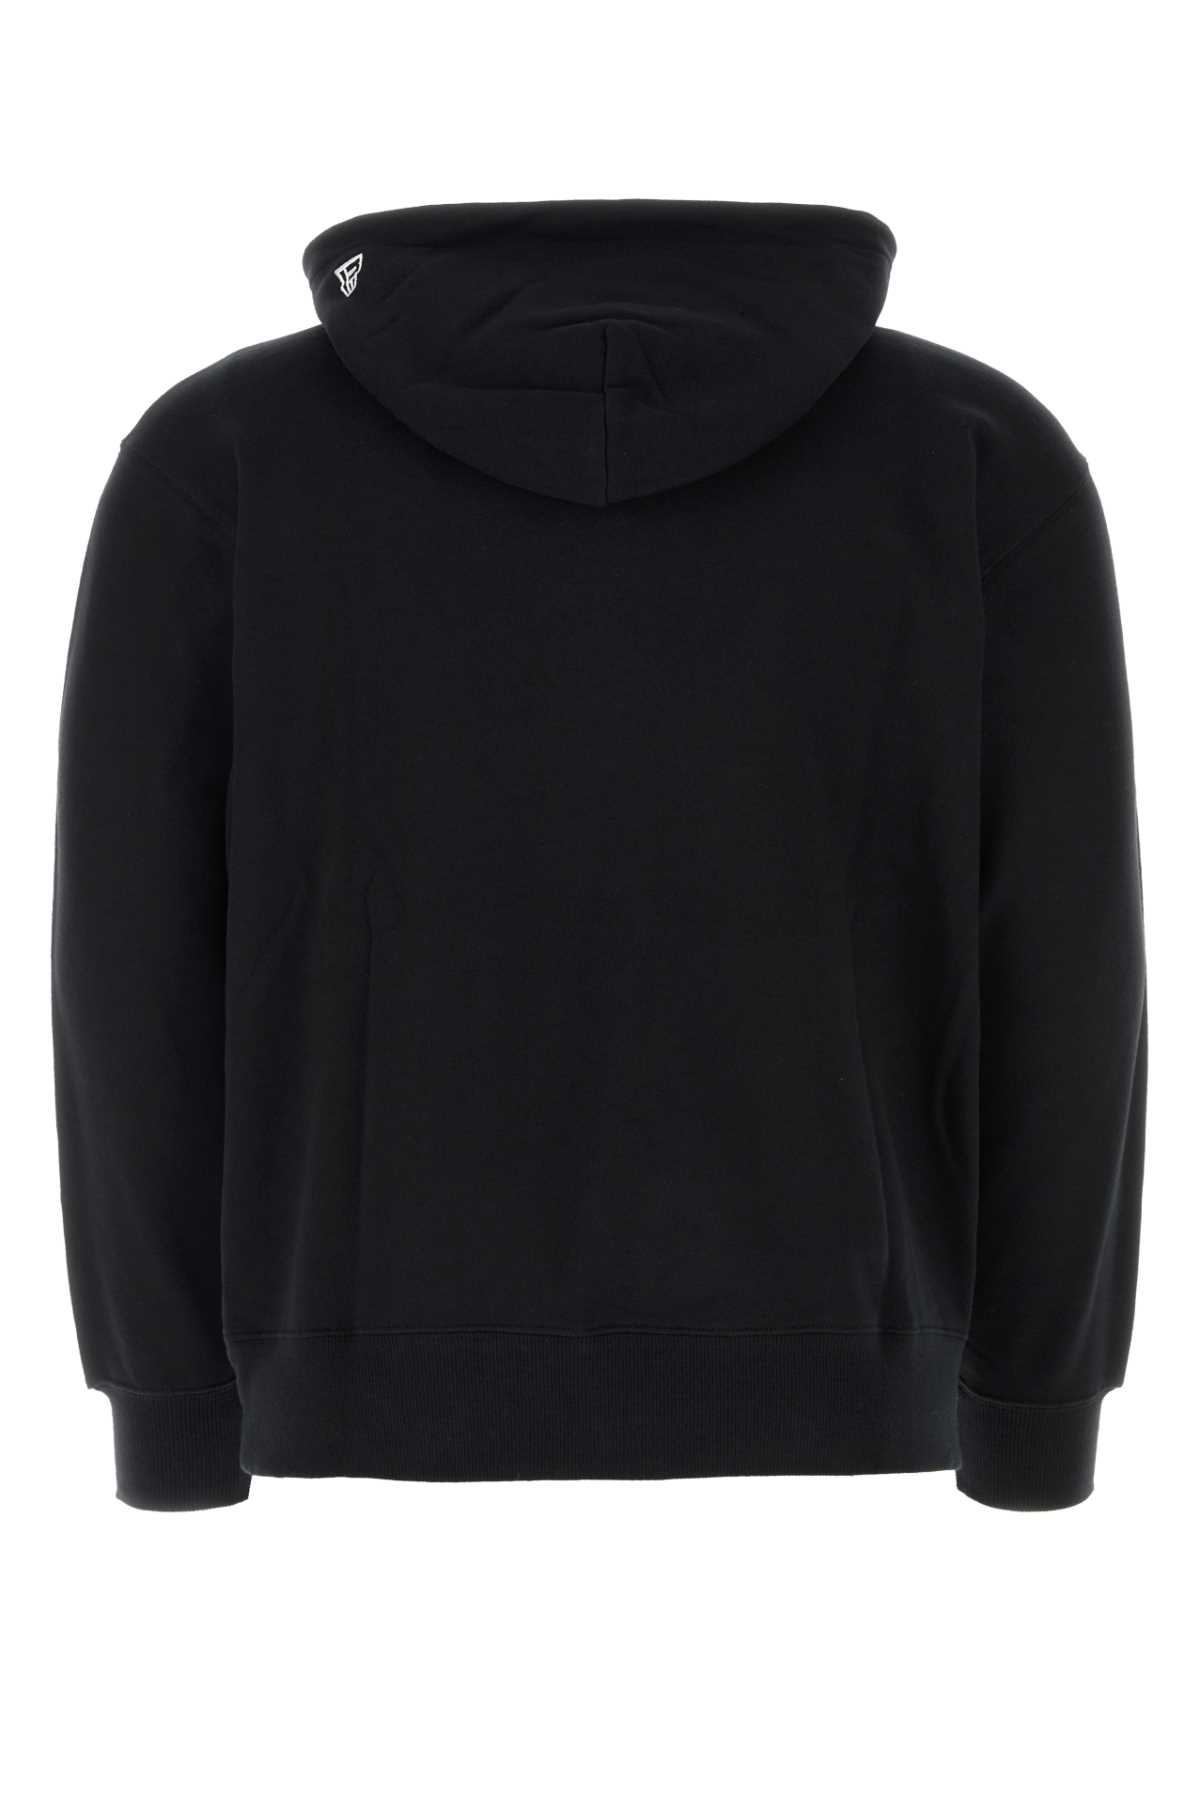 Yohji Yamamoto Black Cotton Sweatshirt